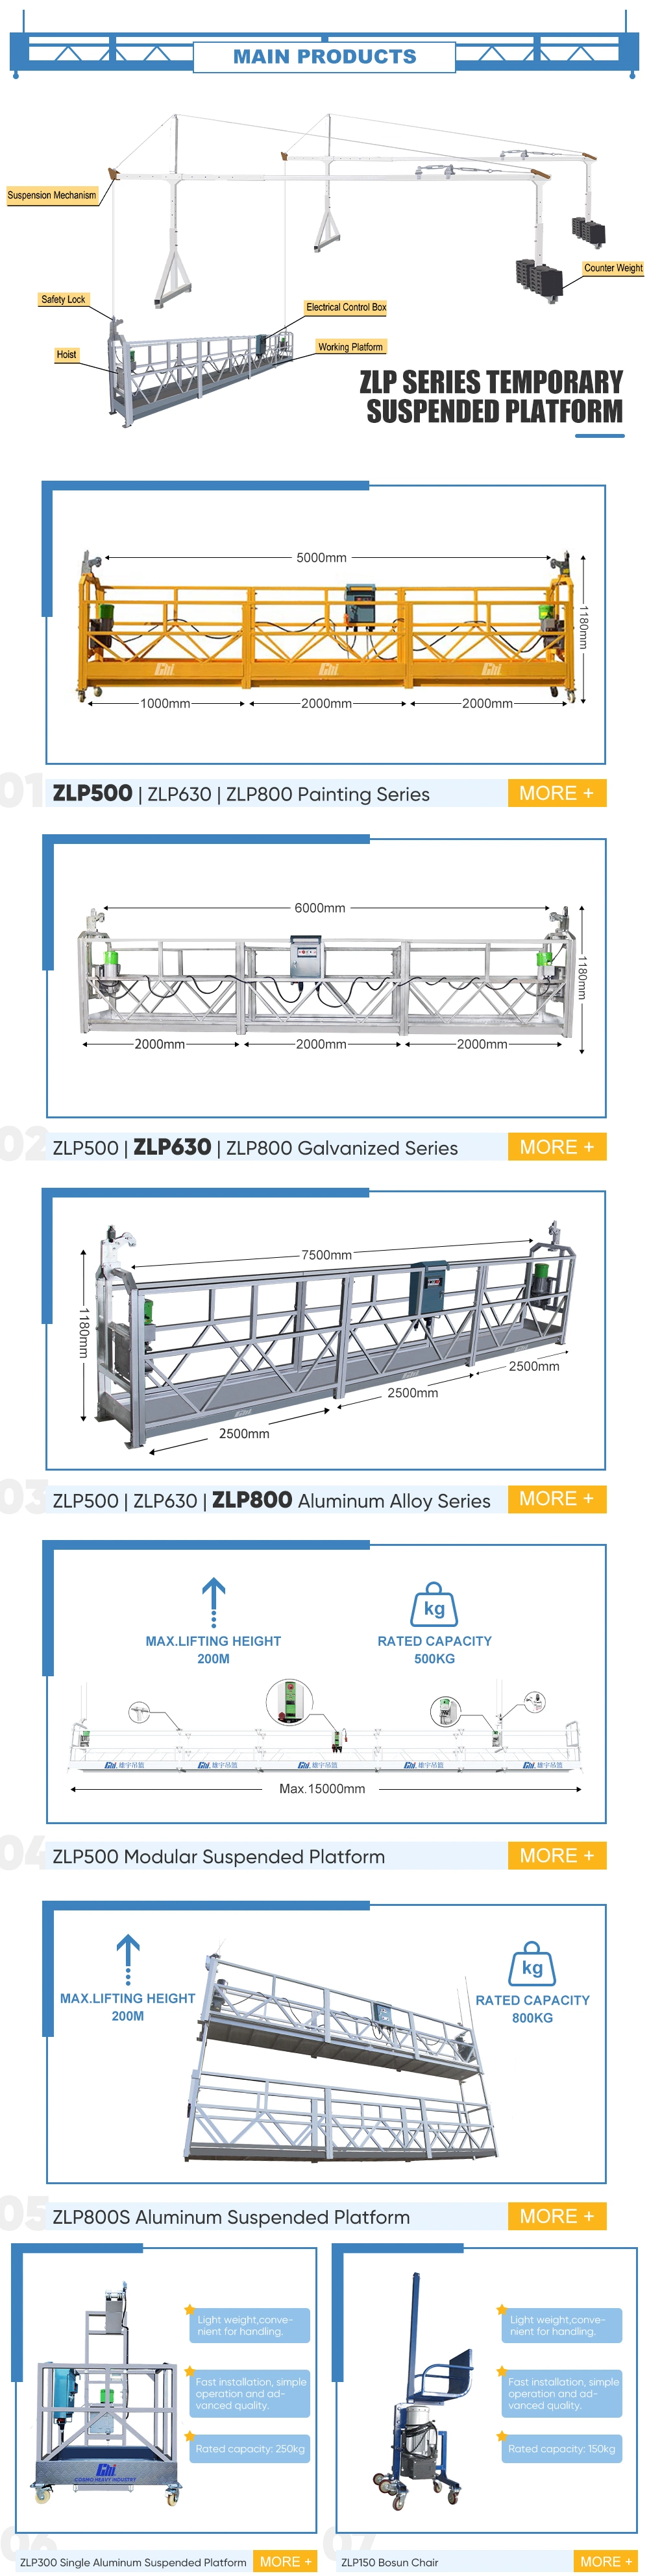 Zlp800 Suspended Platform of Construction Gondola for High Building Maintenance